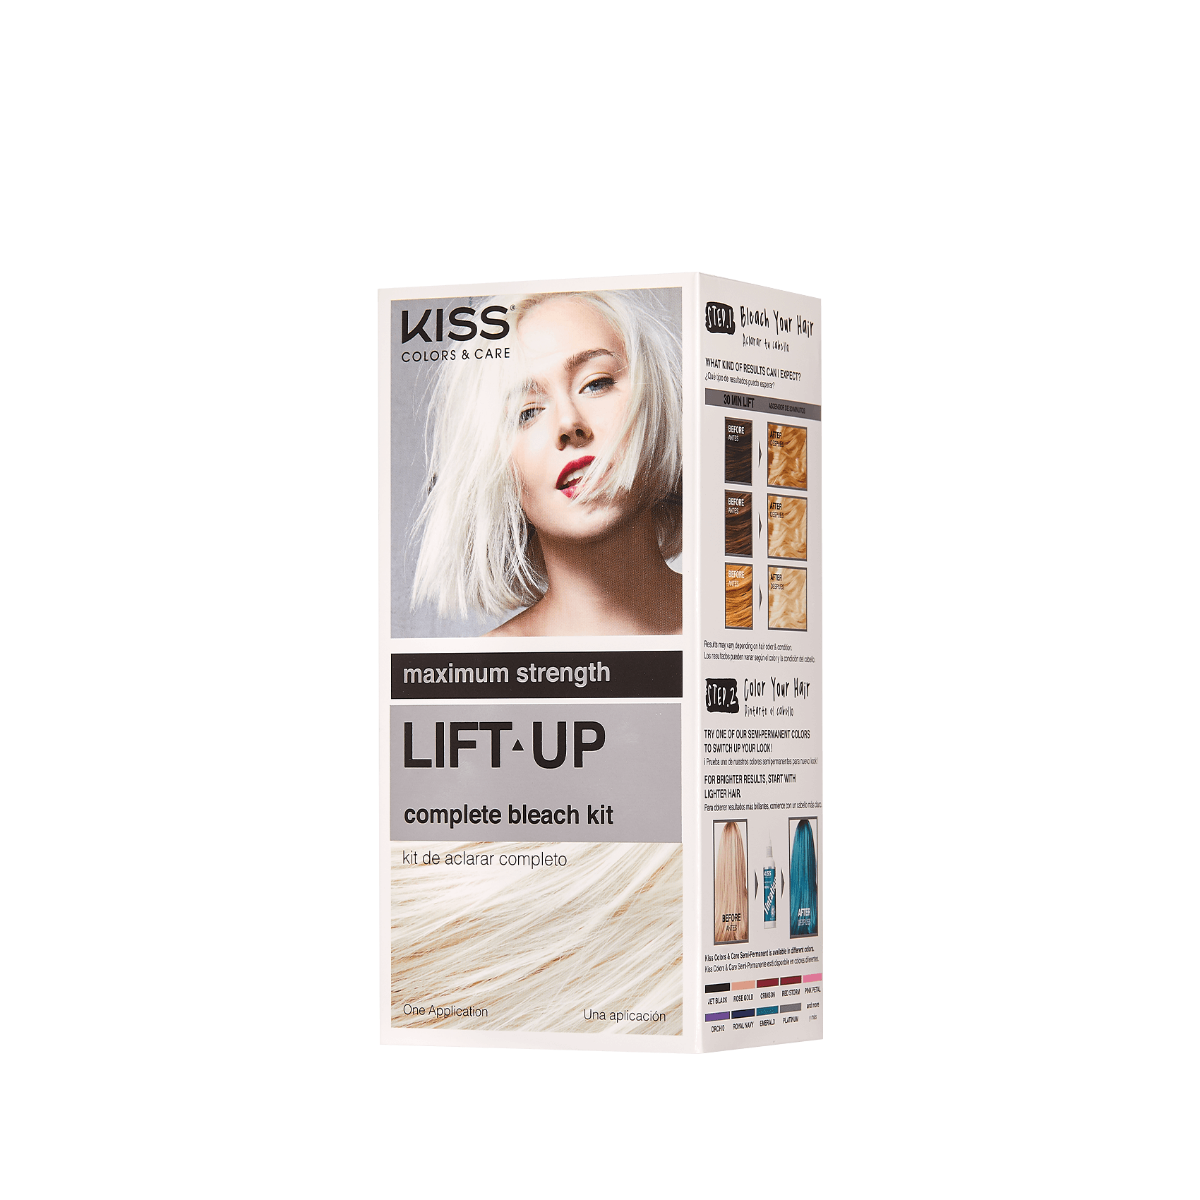 Kiss Lift Up Complete Bleach Kit